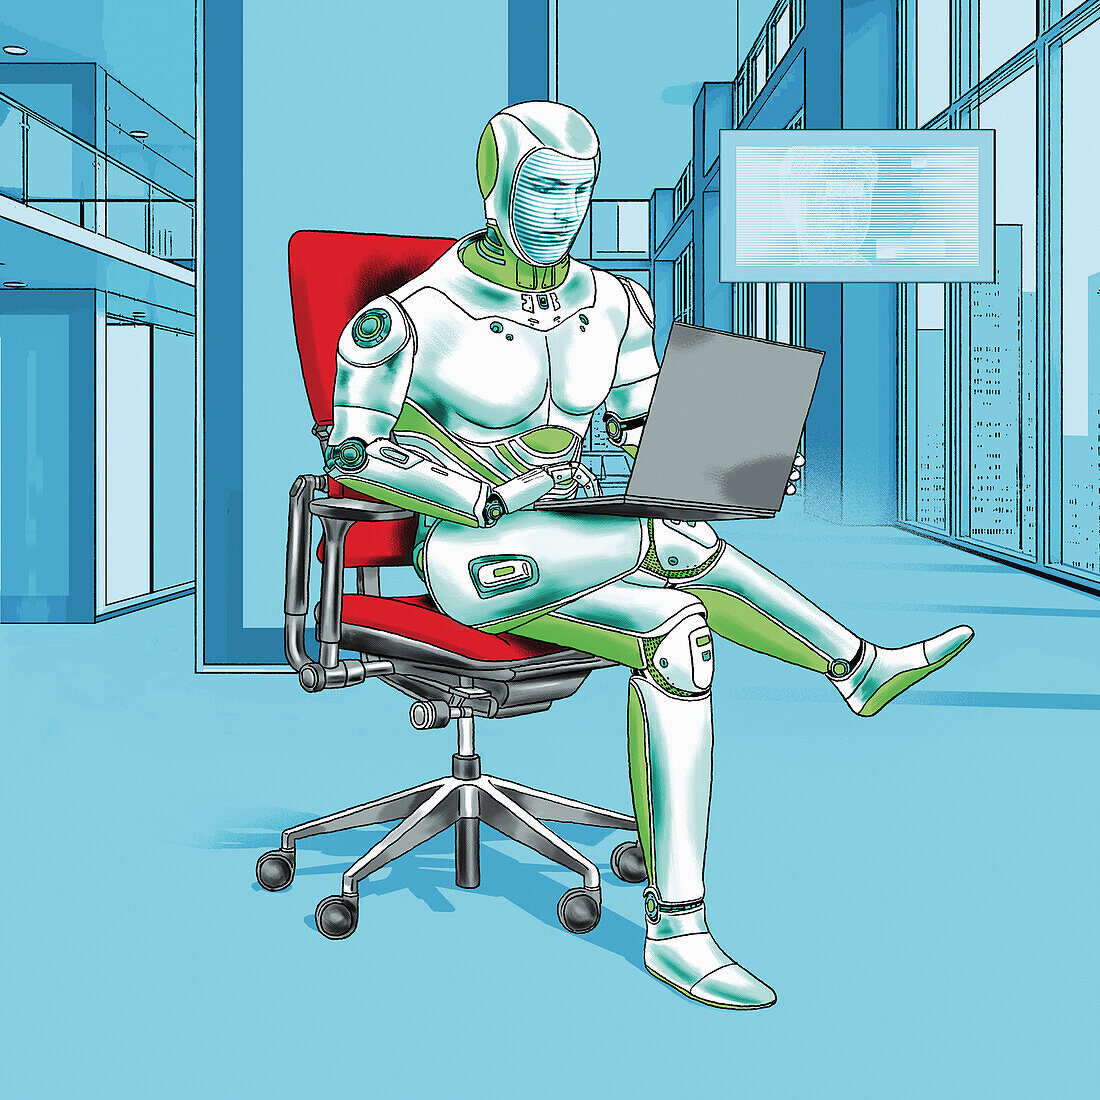 Robot businessman, conceptual illustration